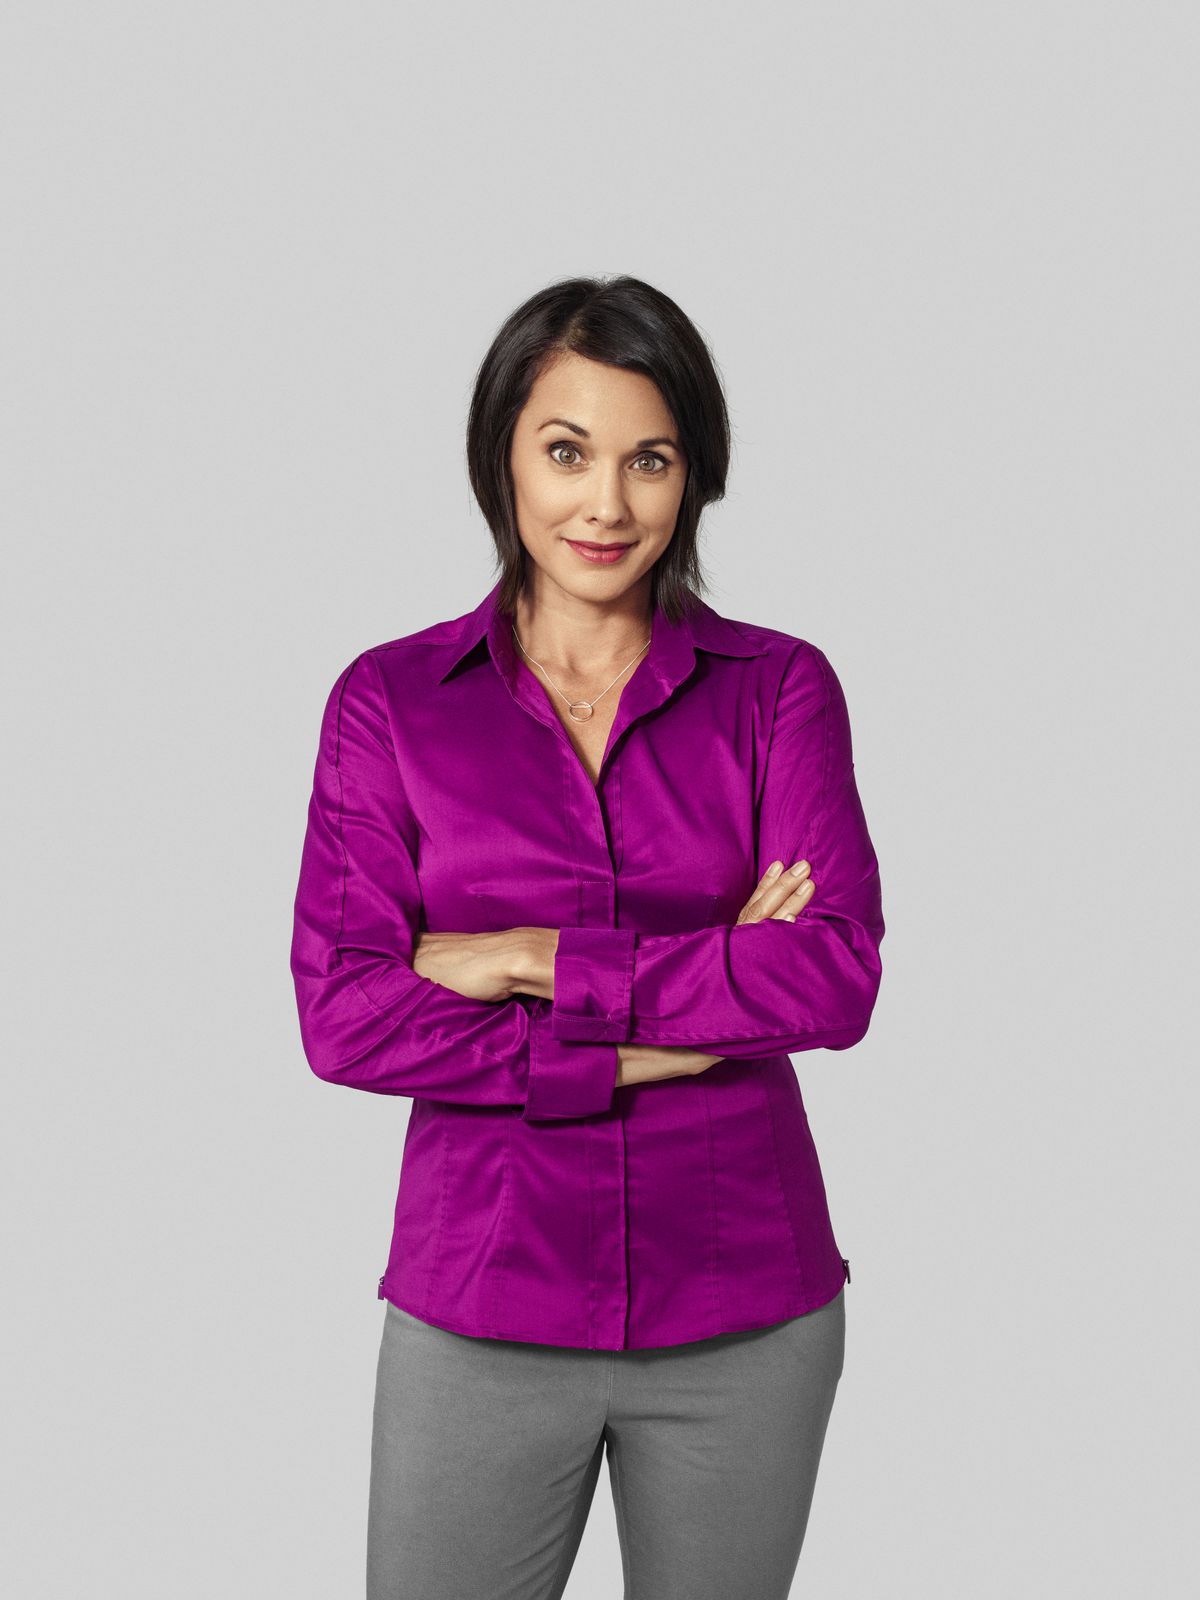 Woman in purple shirt looking at camera